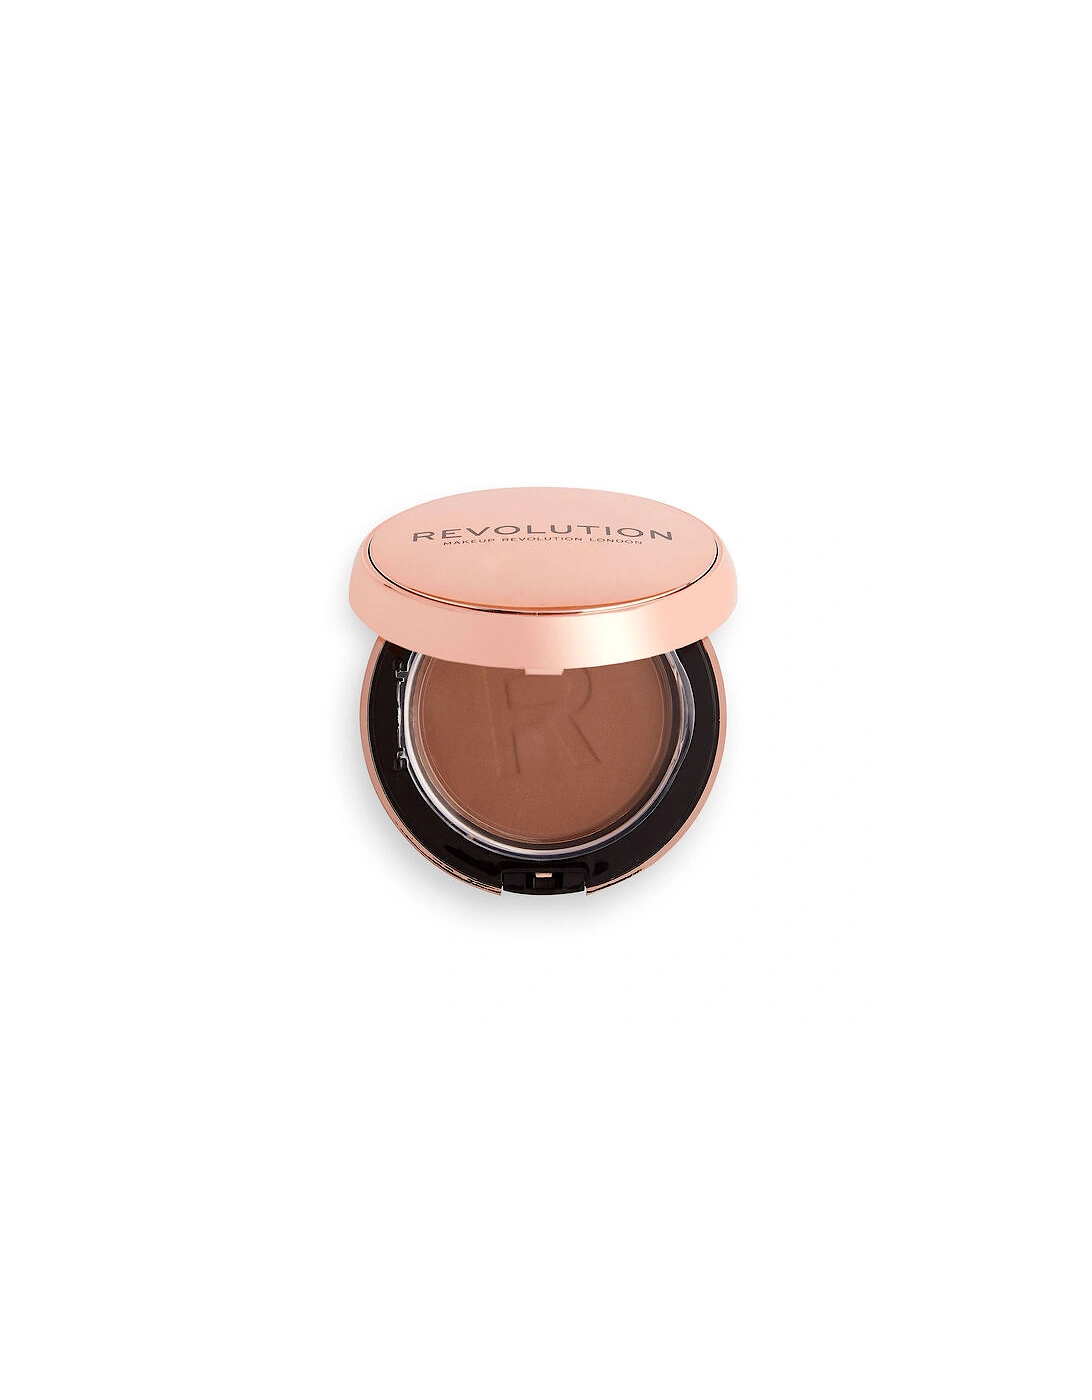 Makeup Conceal & Define Powder Foundation P16.5, 2 of 1